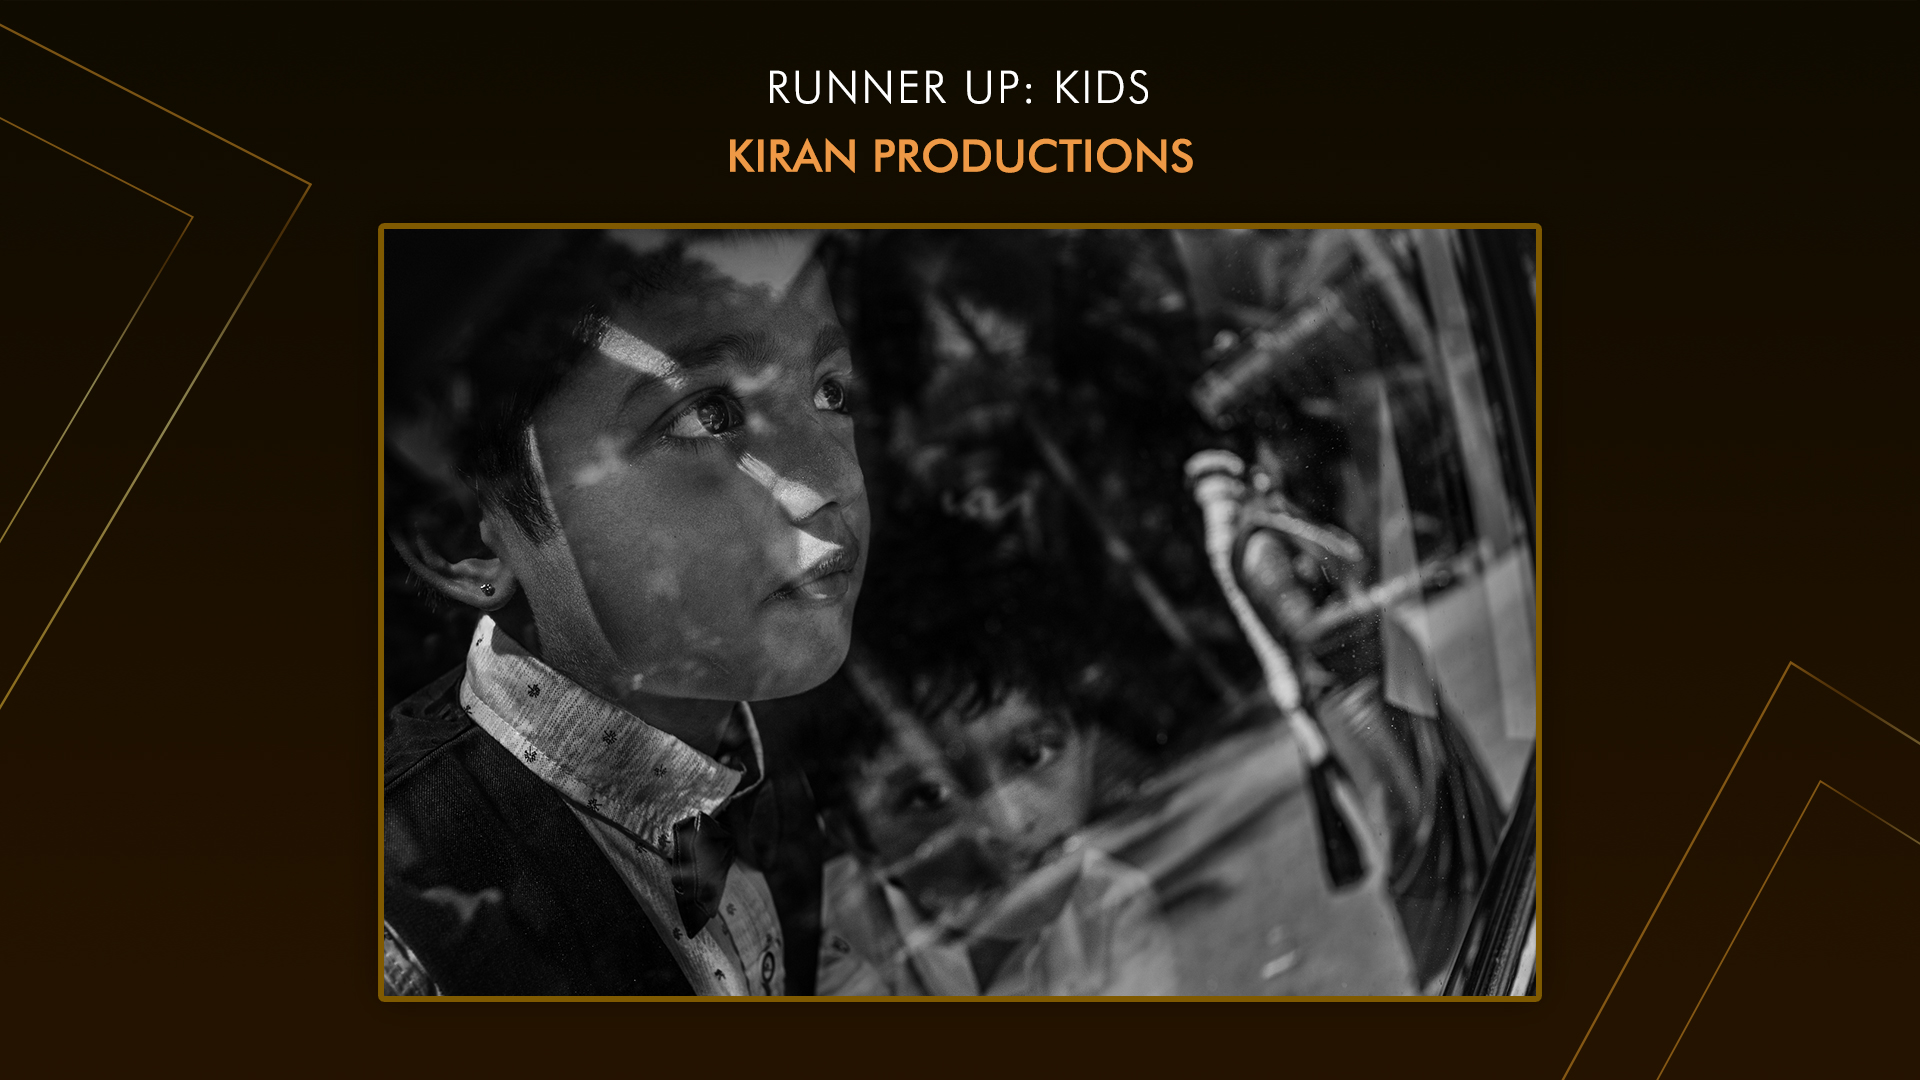 Kiran Productions